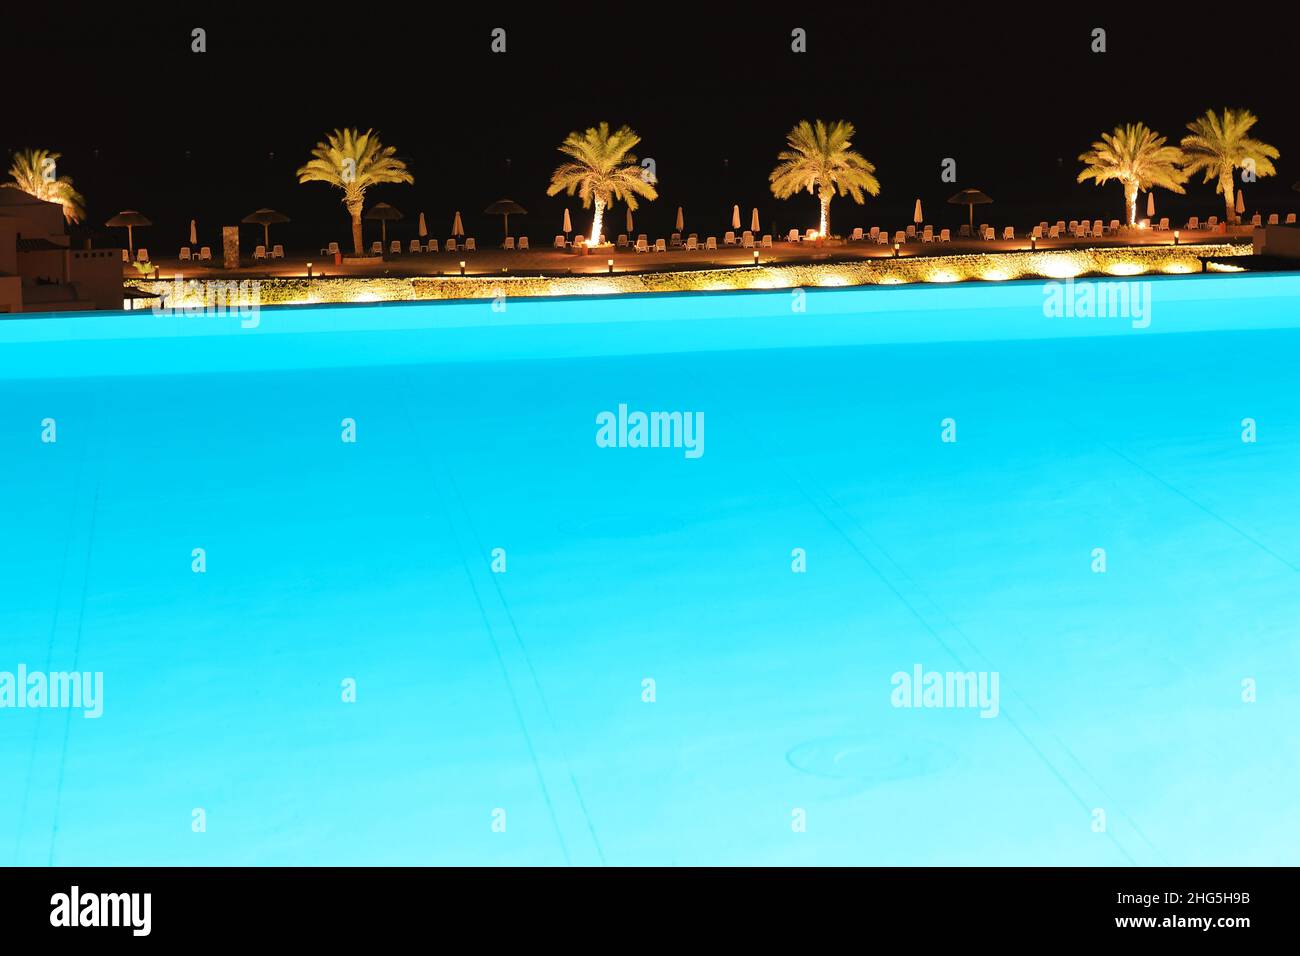 The swimming pool and beach at luxury hotel in night illumination, Ras Al Khaima, UAE Stock Photo